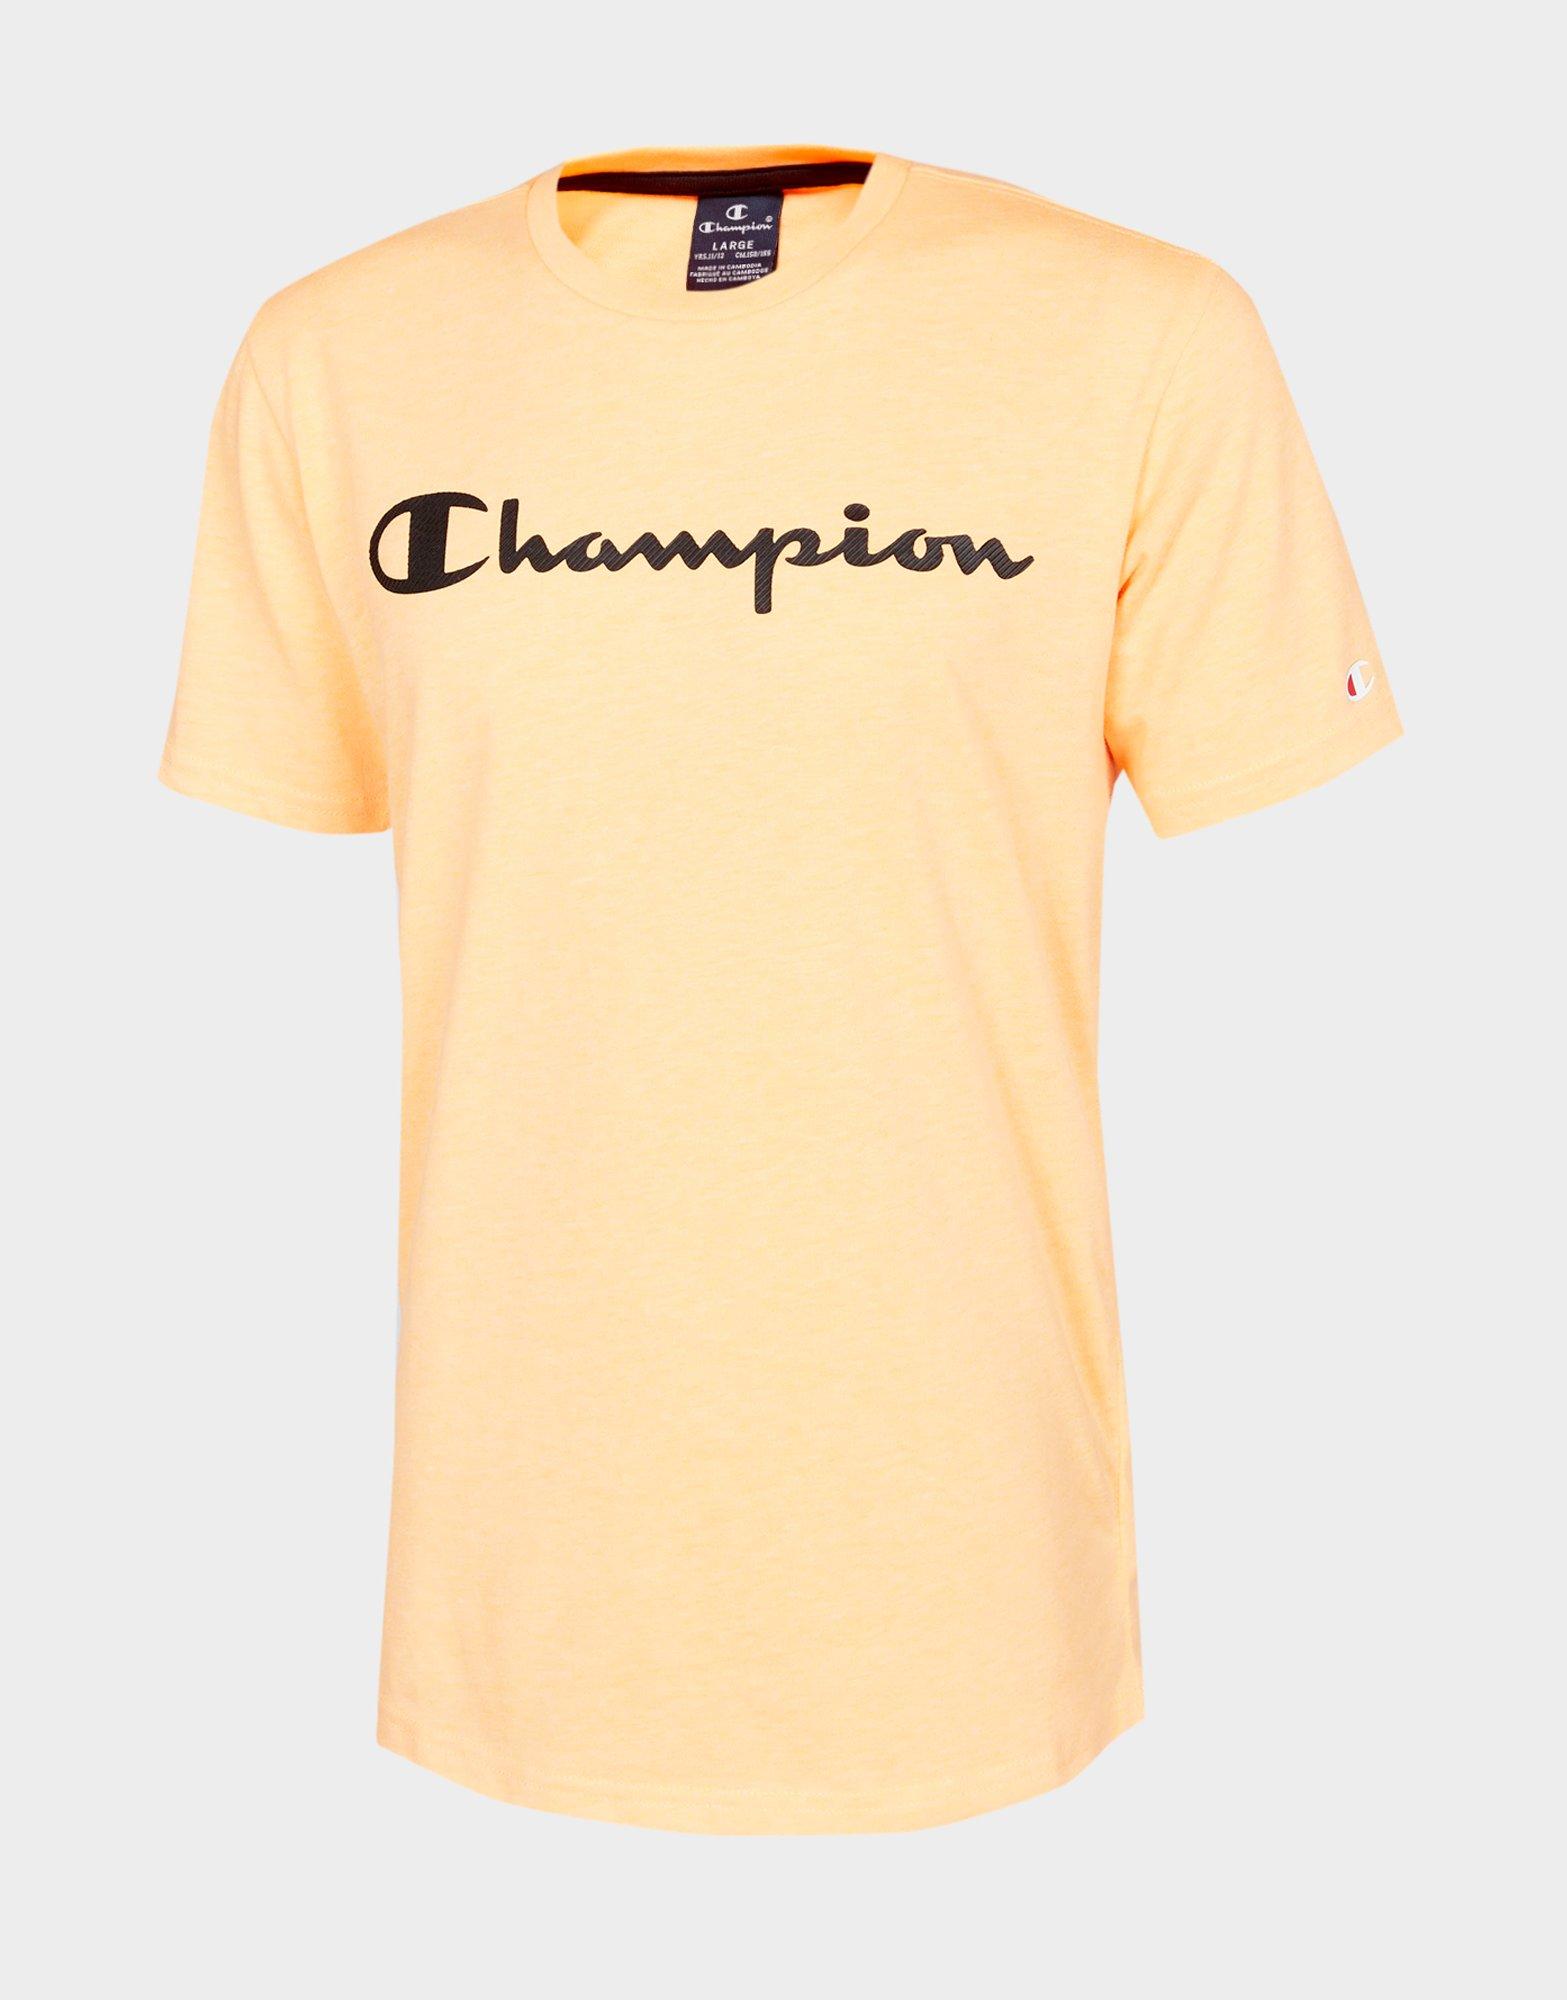 orange champion tee